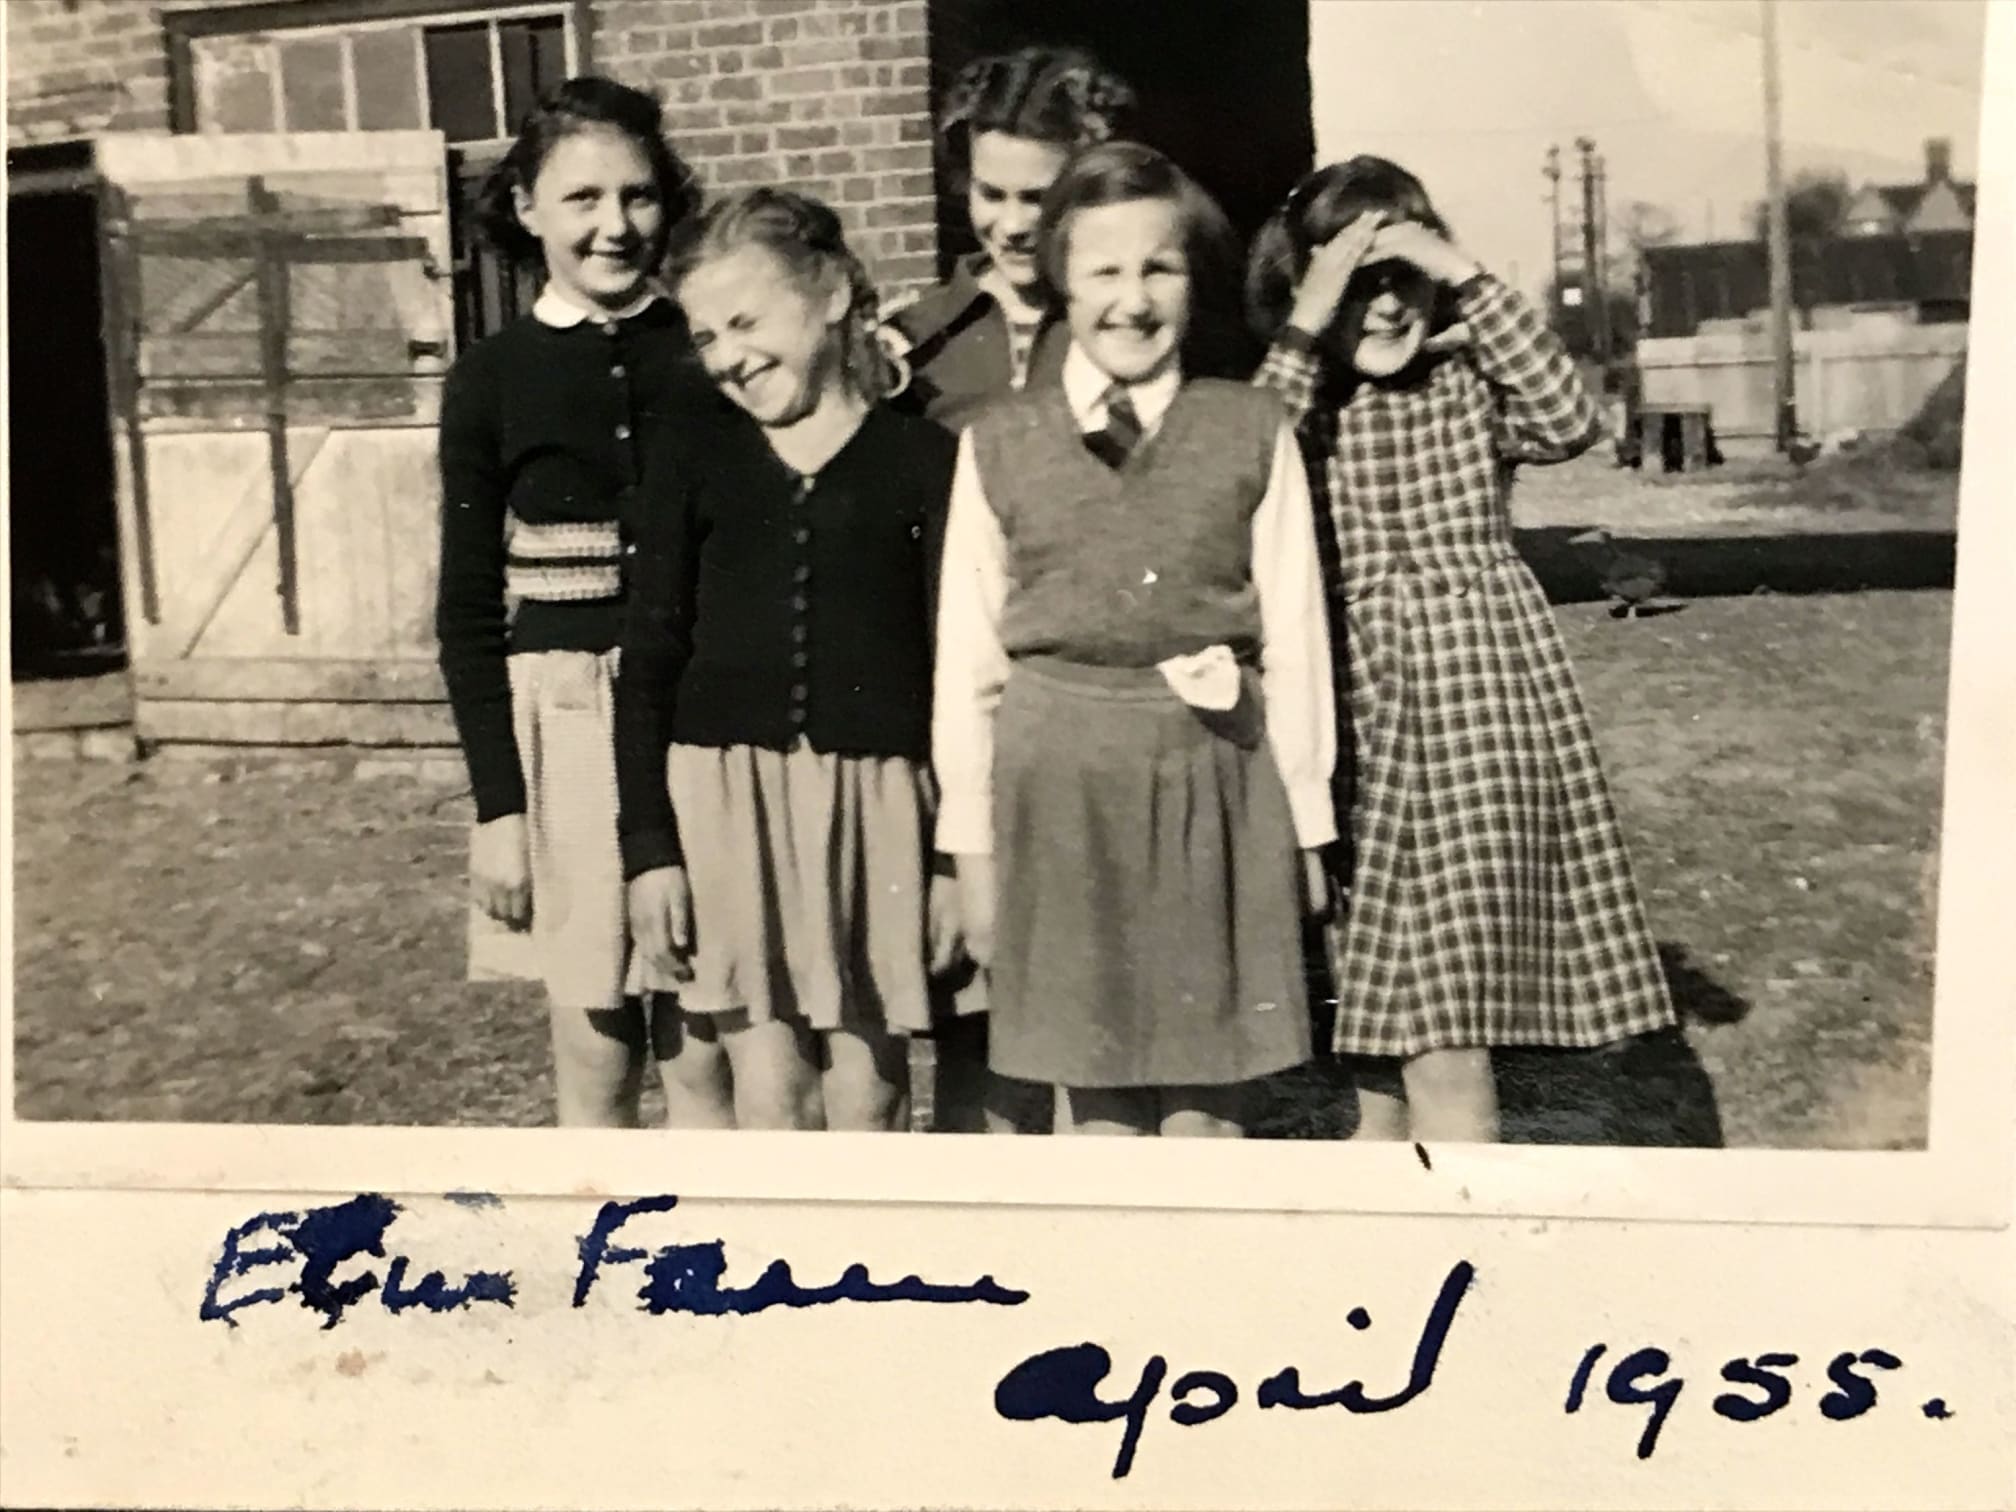 Sunday School girls visiting Elm Farm in 1955